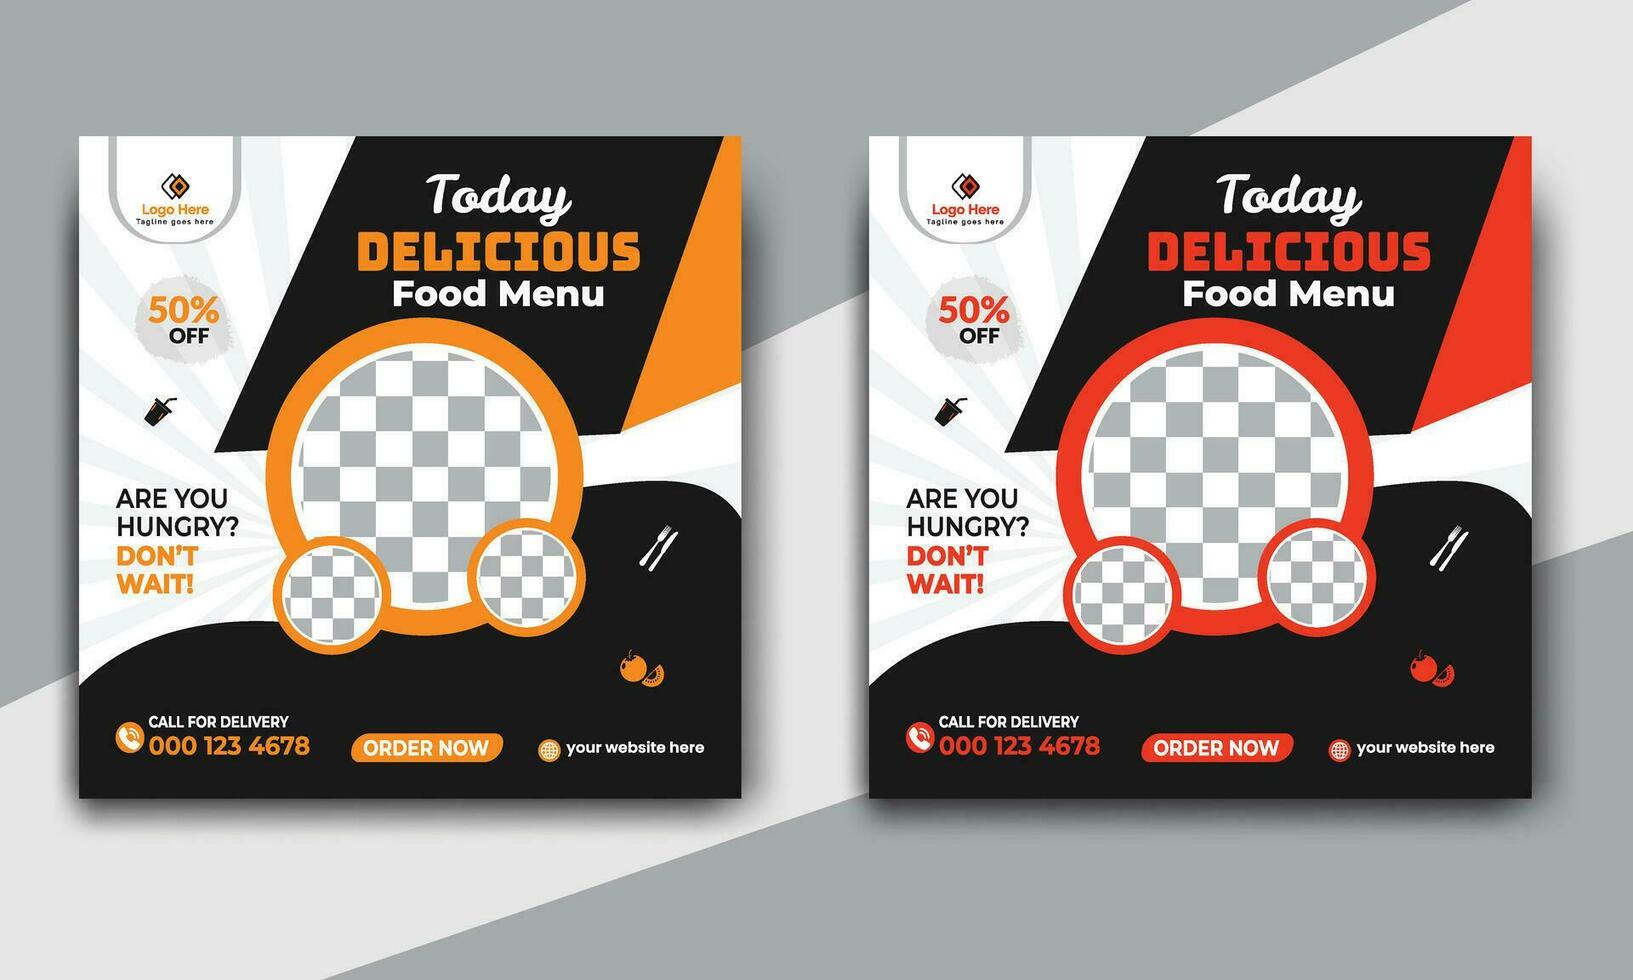 rápido comida restaurante negocio márketing social medios de comunicación enviar o web bandera modelo diseño con resumen antecedentes. Fresco pizza, hamburguesa y en línea rebaja promoción volantes o póster diseño. vector